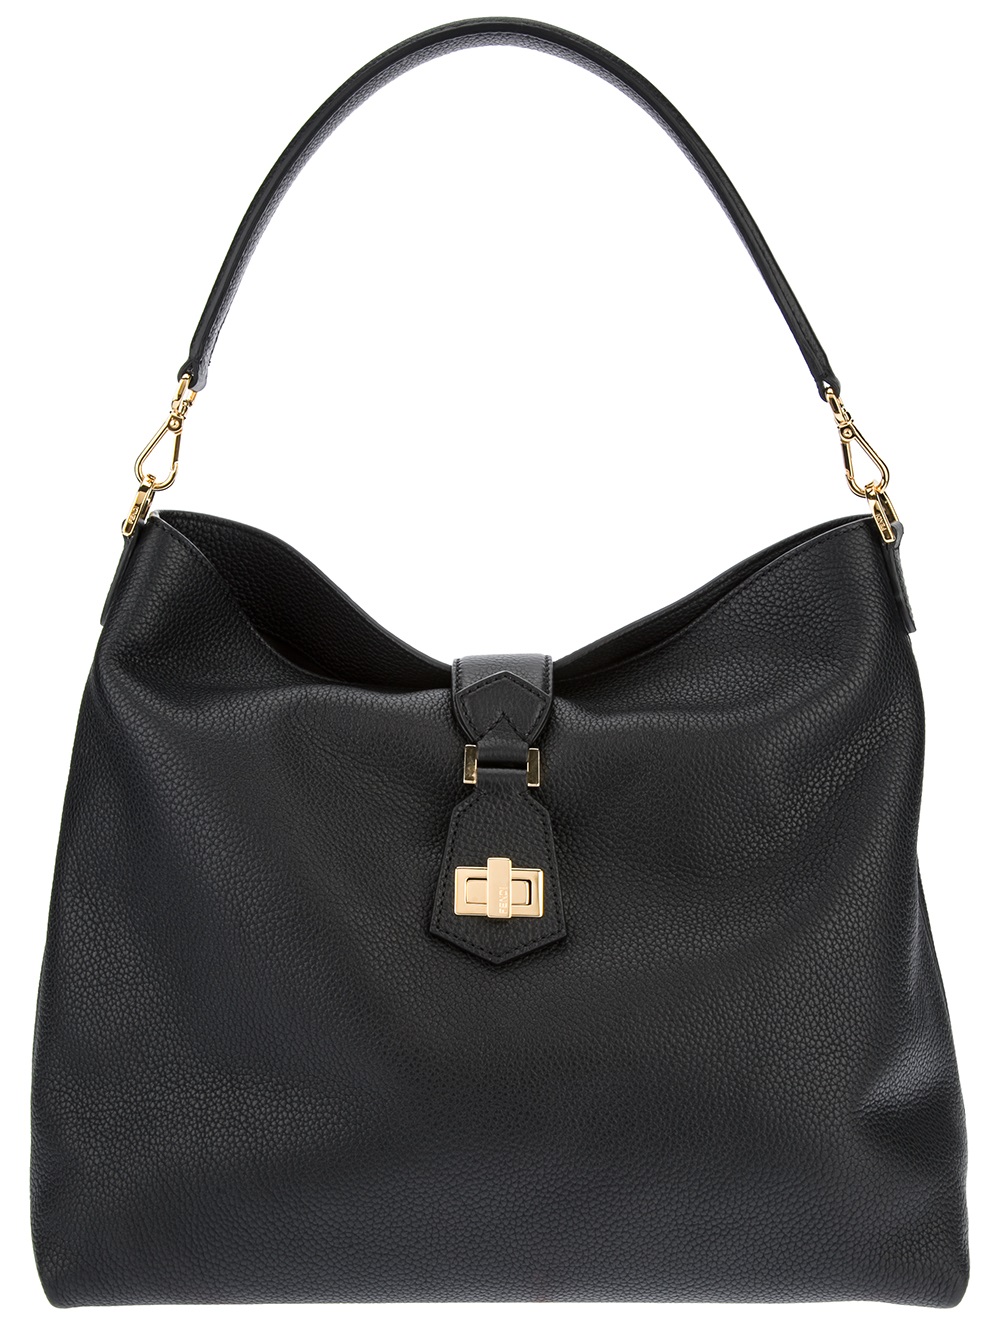 Fendi Classic Hobo Bag in Black | Lyst